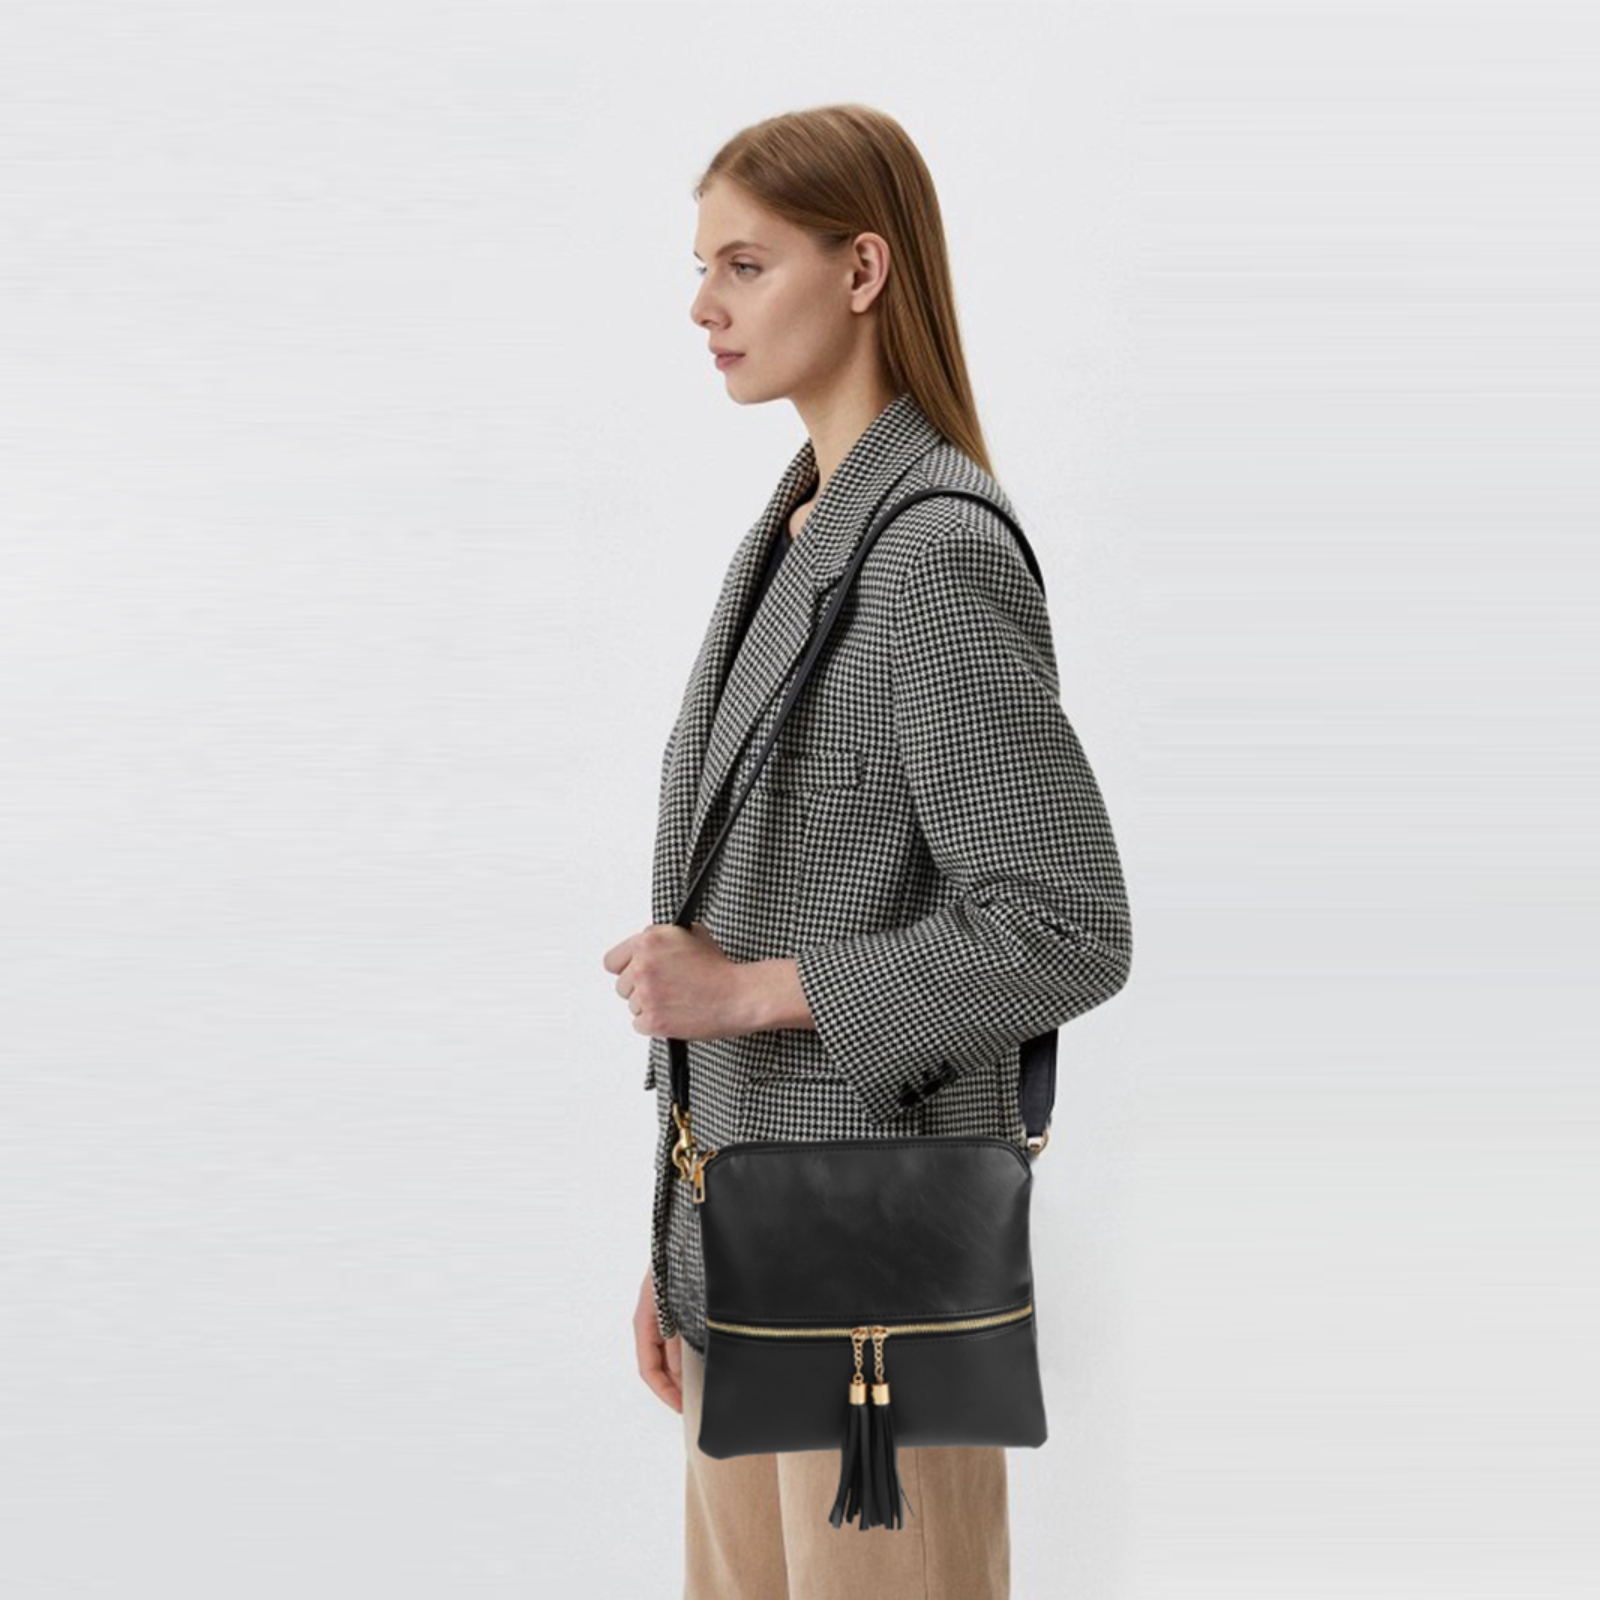 TSV Crossbody Bag for Women, PU Leather Shoulder Bag with Adjustable Strap, Ladies Large Capacity Tote Bag, Black - image 5 of 8